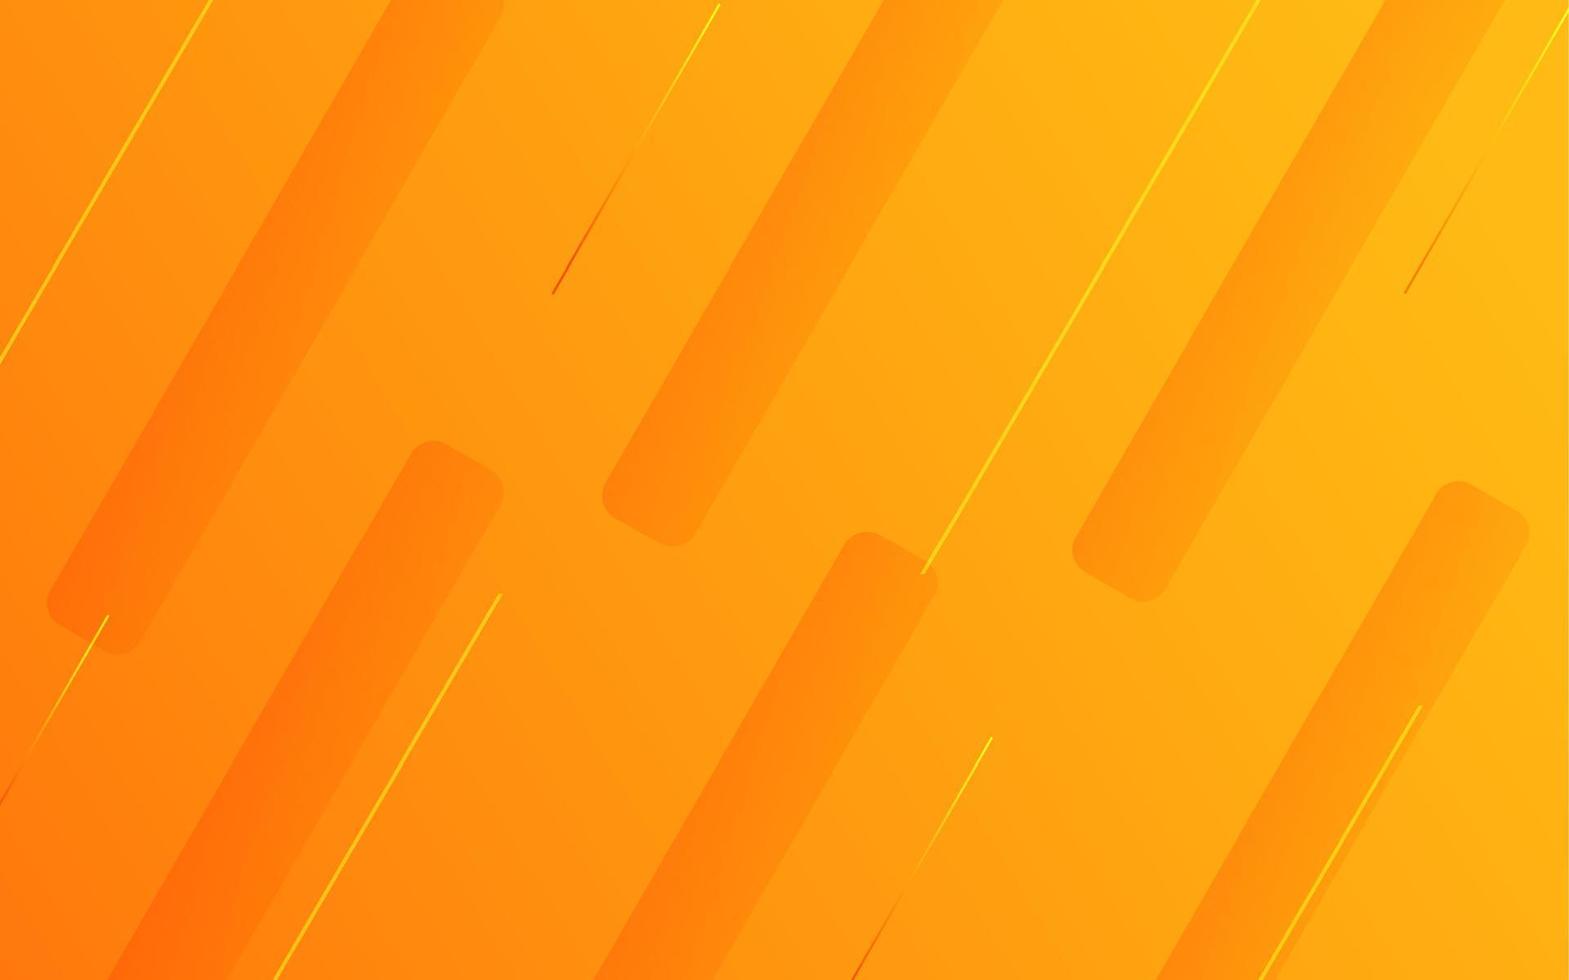 Abstract gradient orange modern design background vector